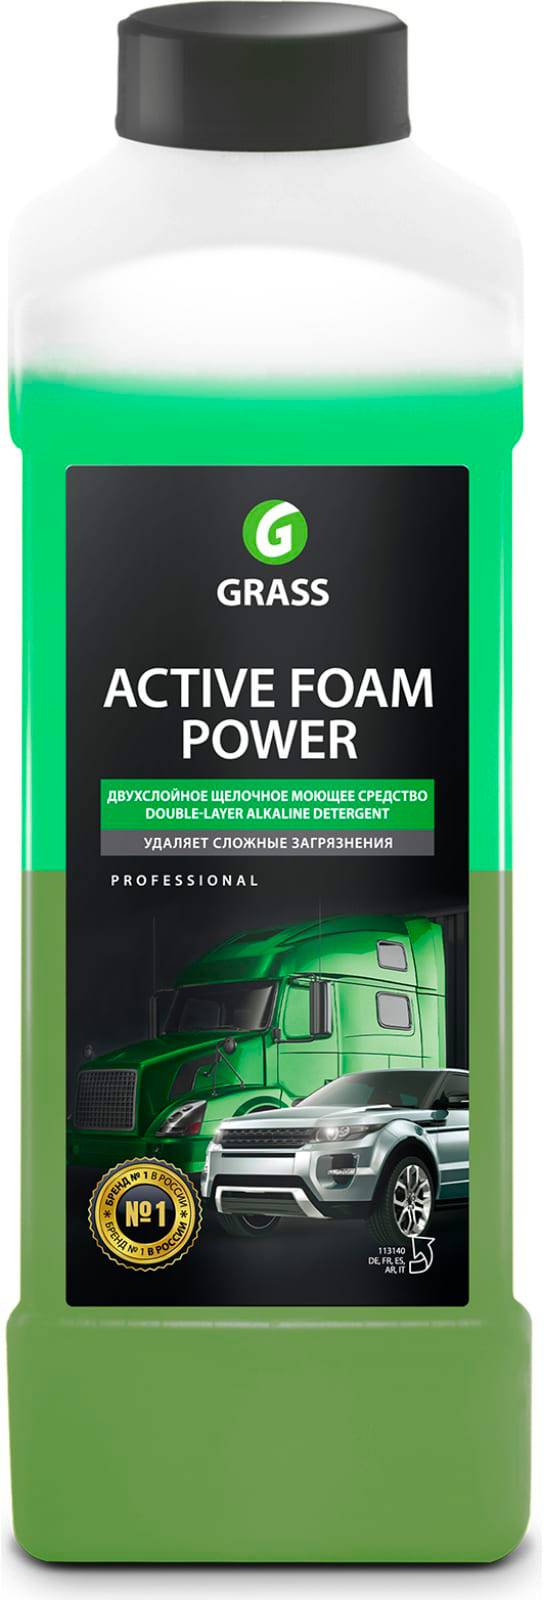 Активная пена GRASS "Active Foam Power" 1л.